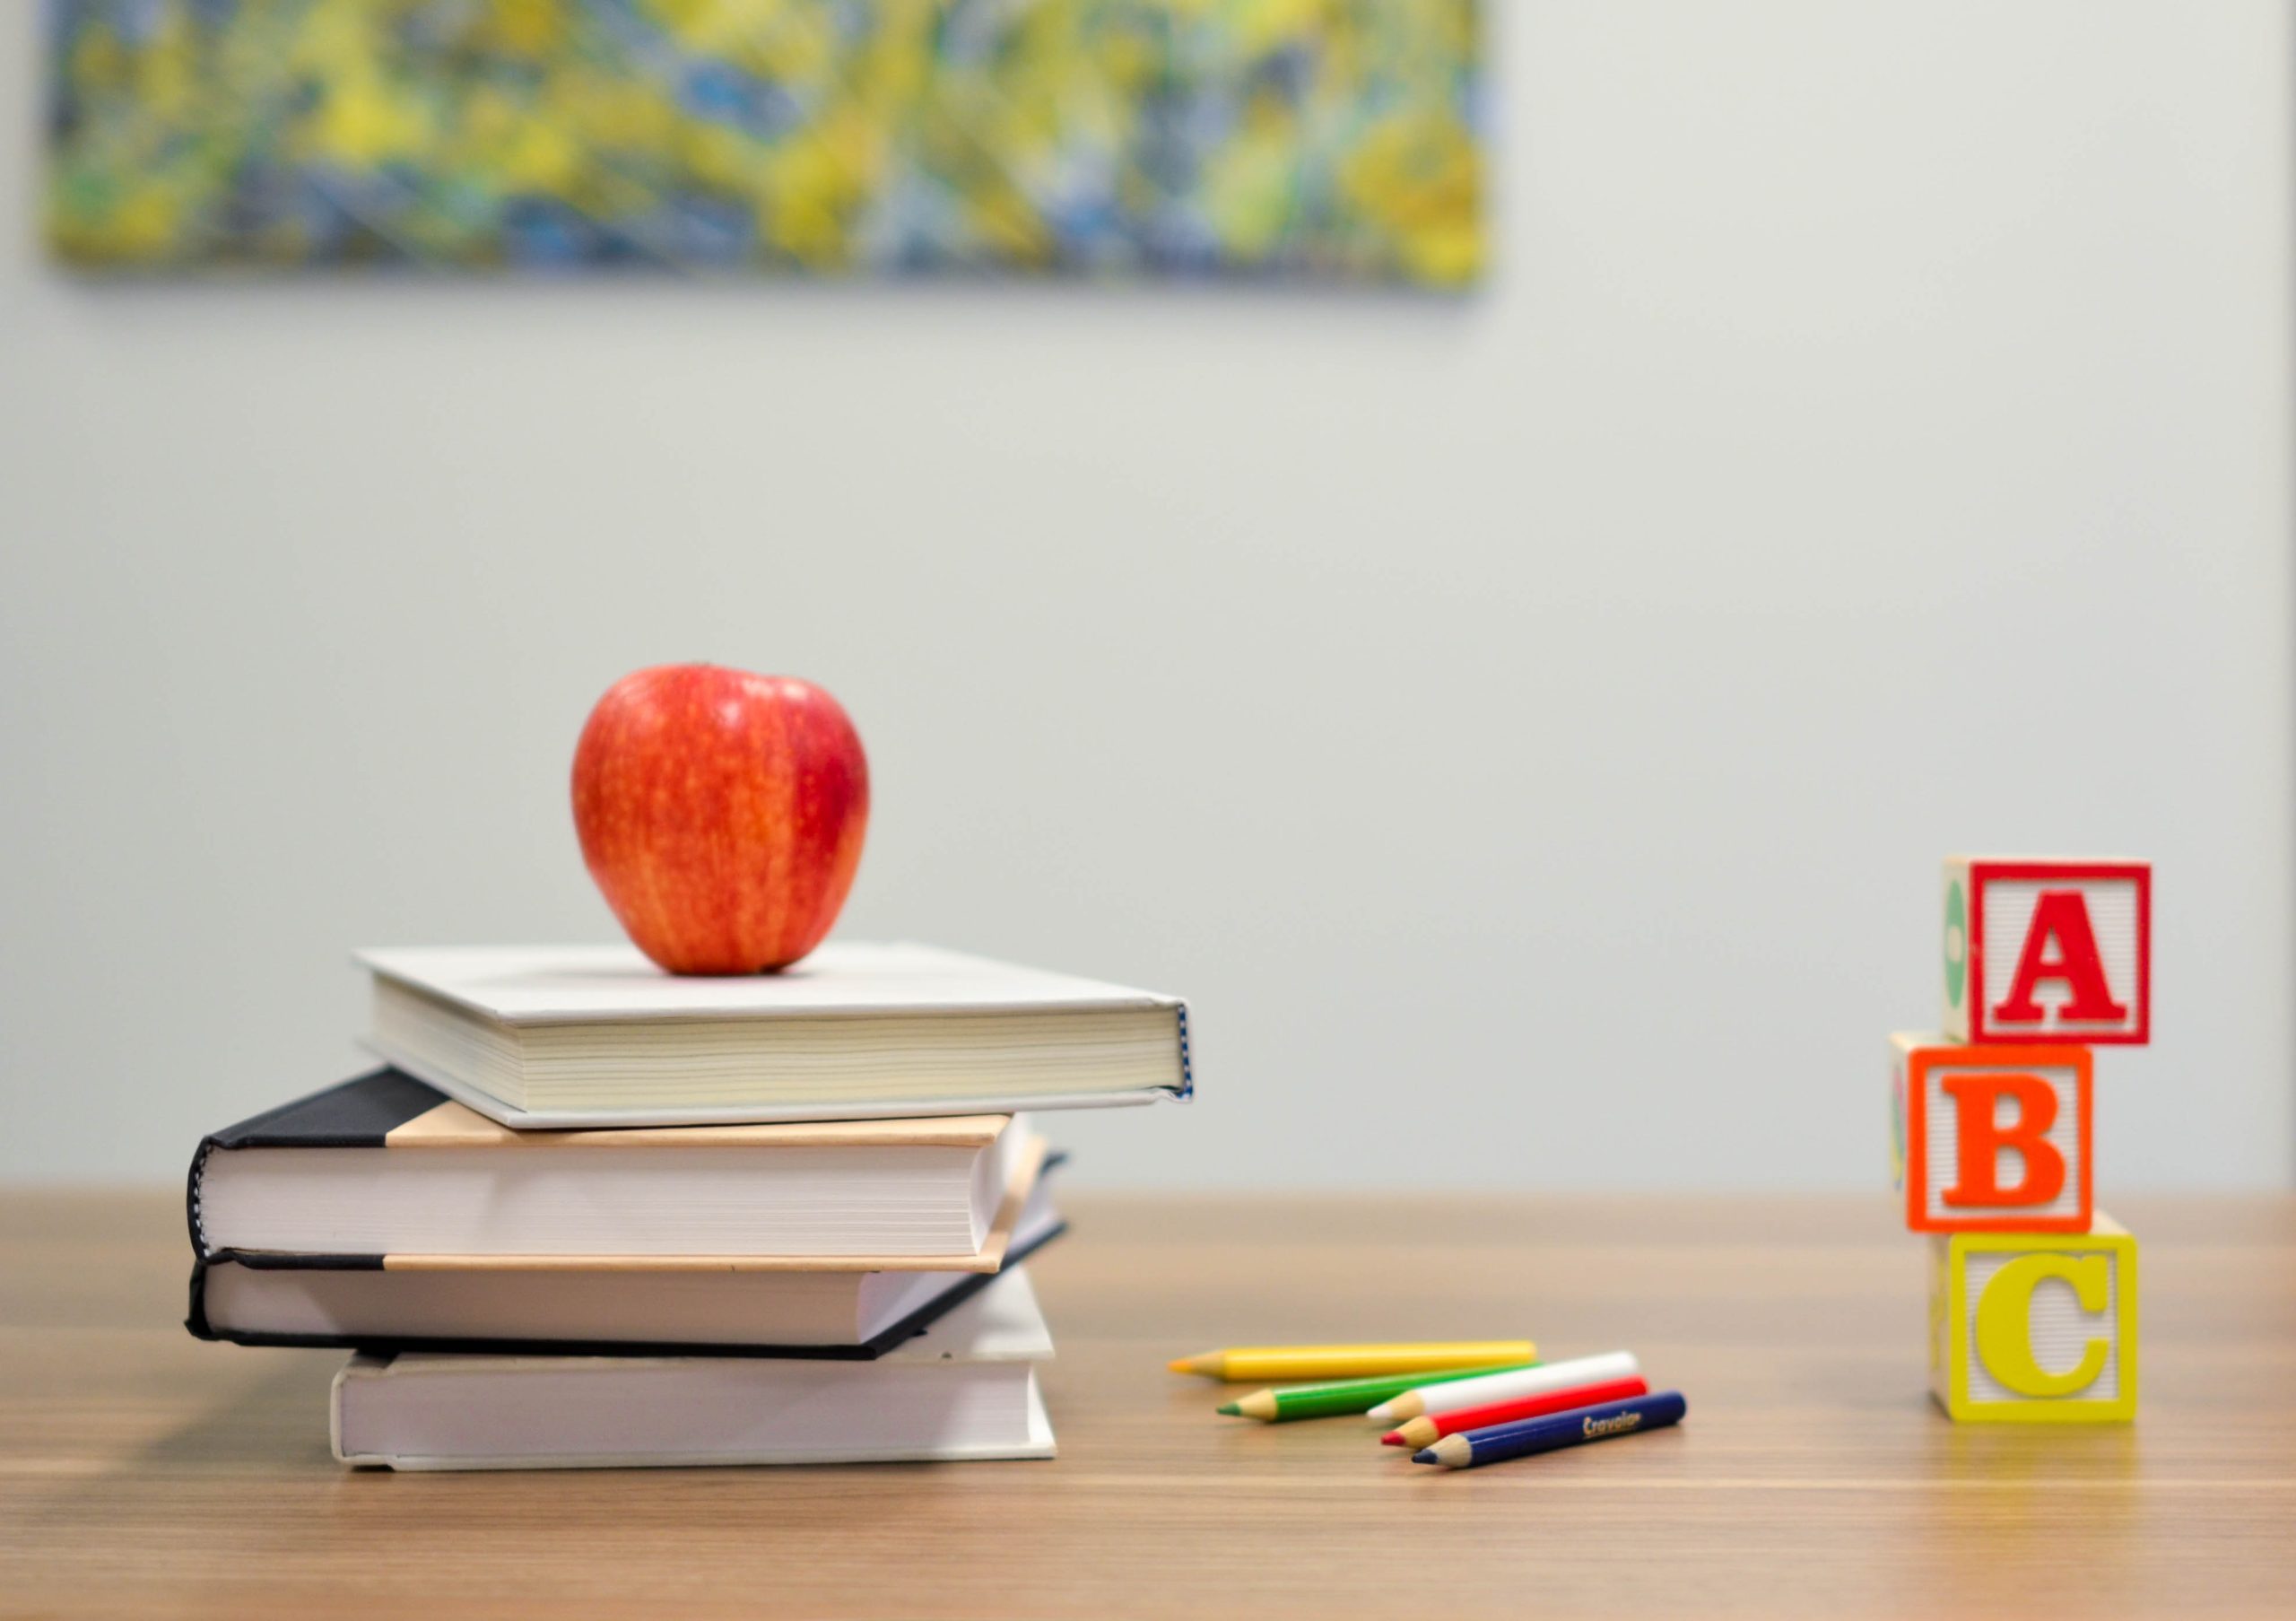 Books, alphabets, and an apple on a study table